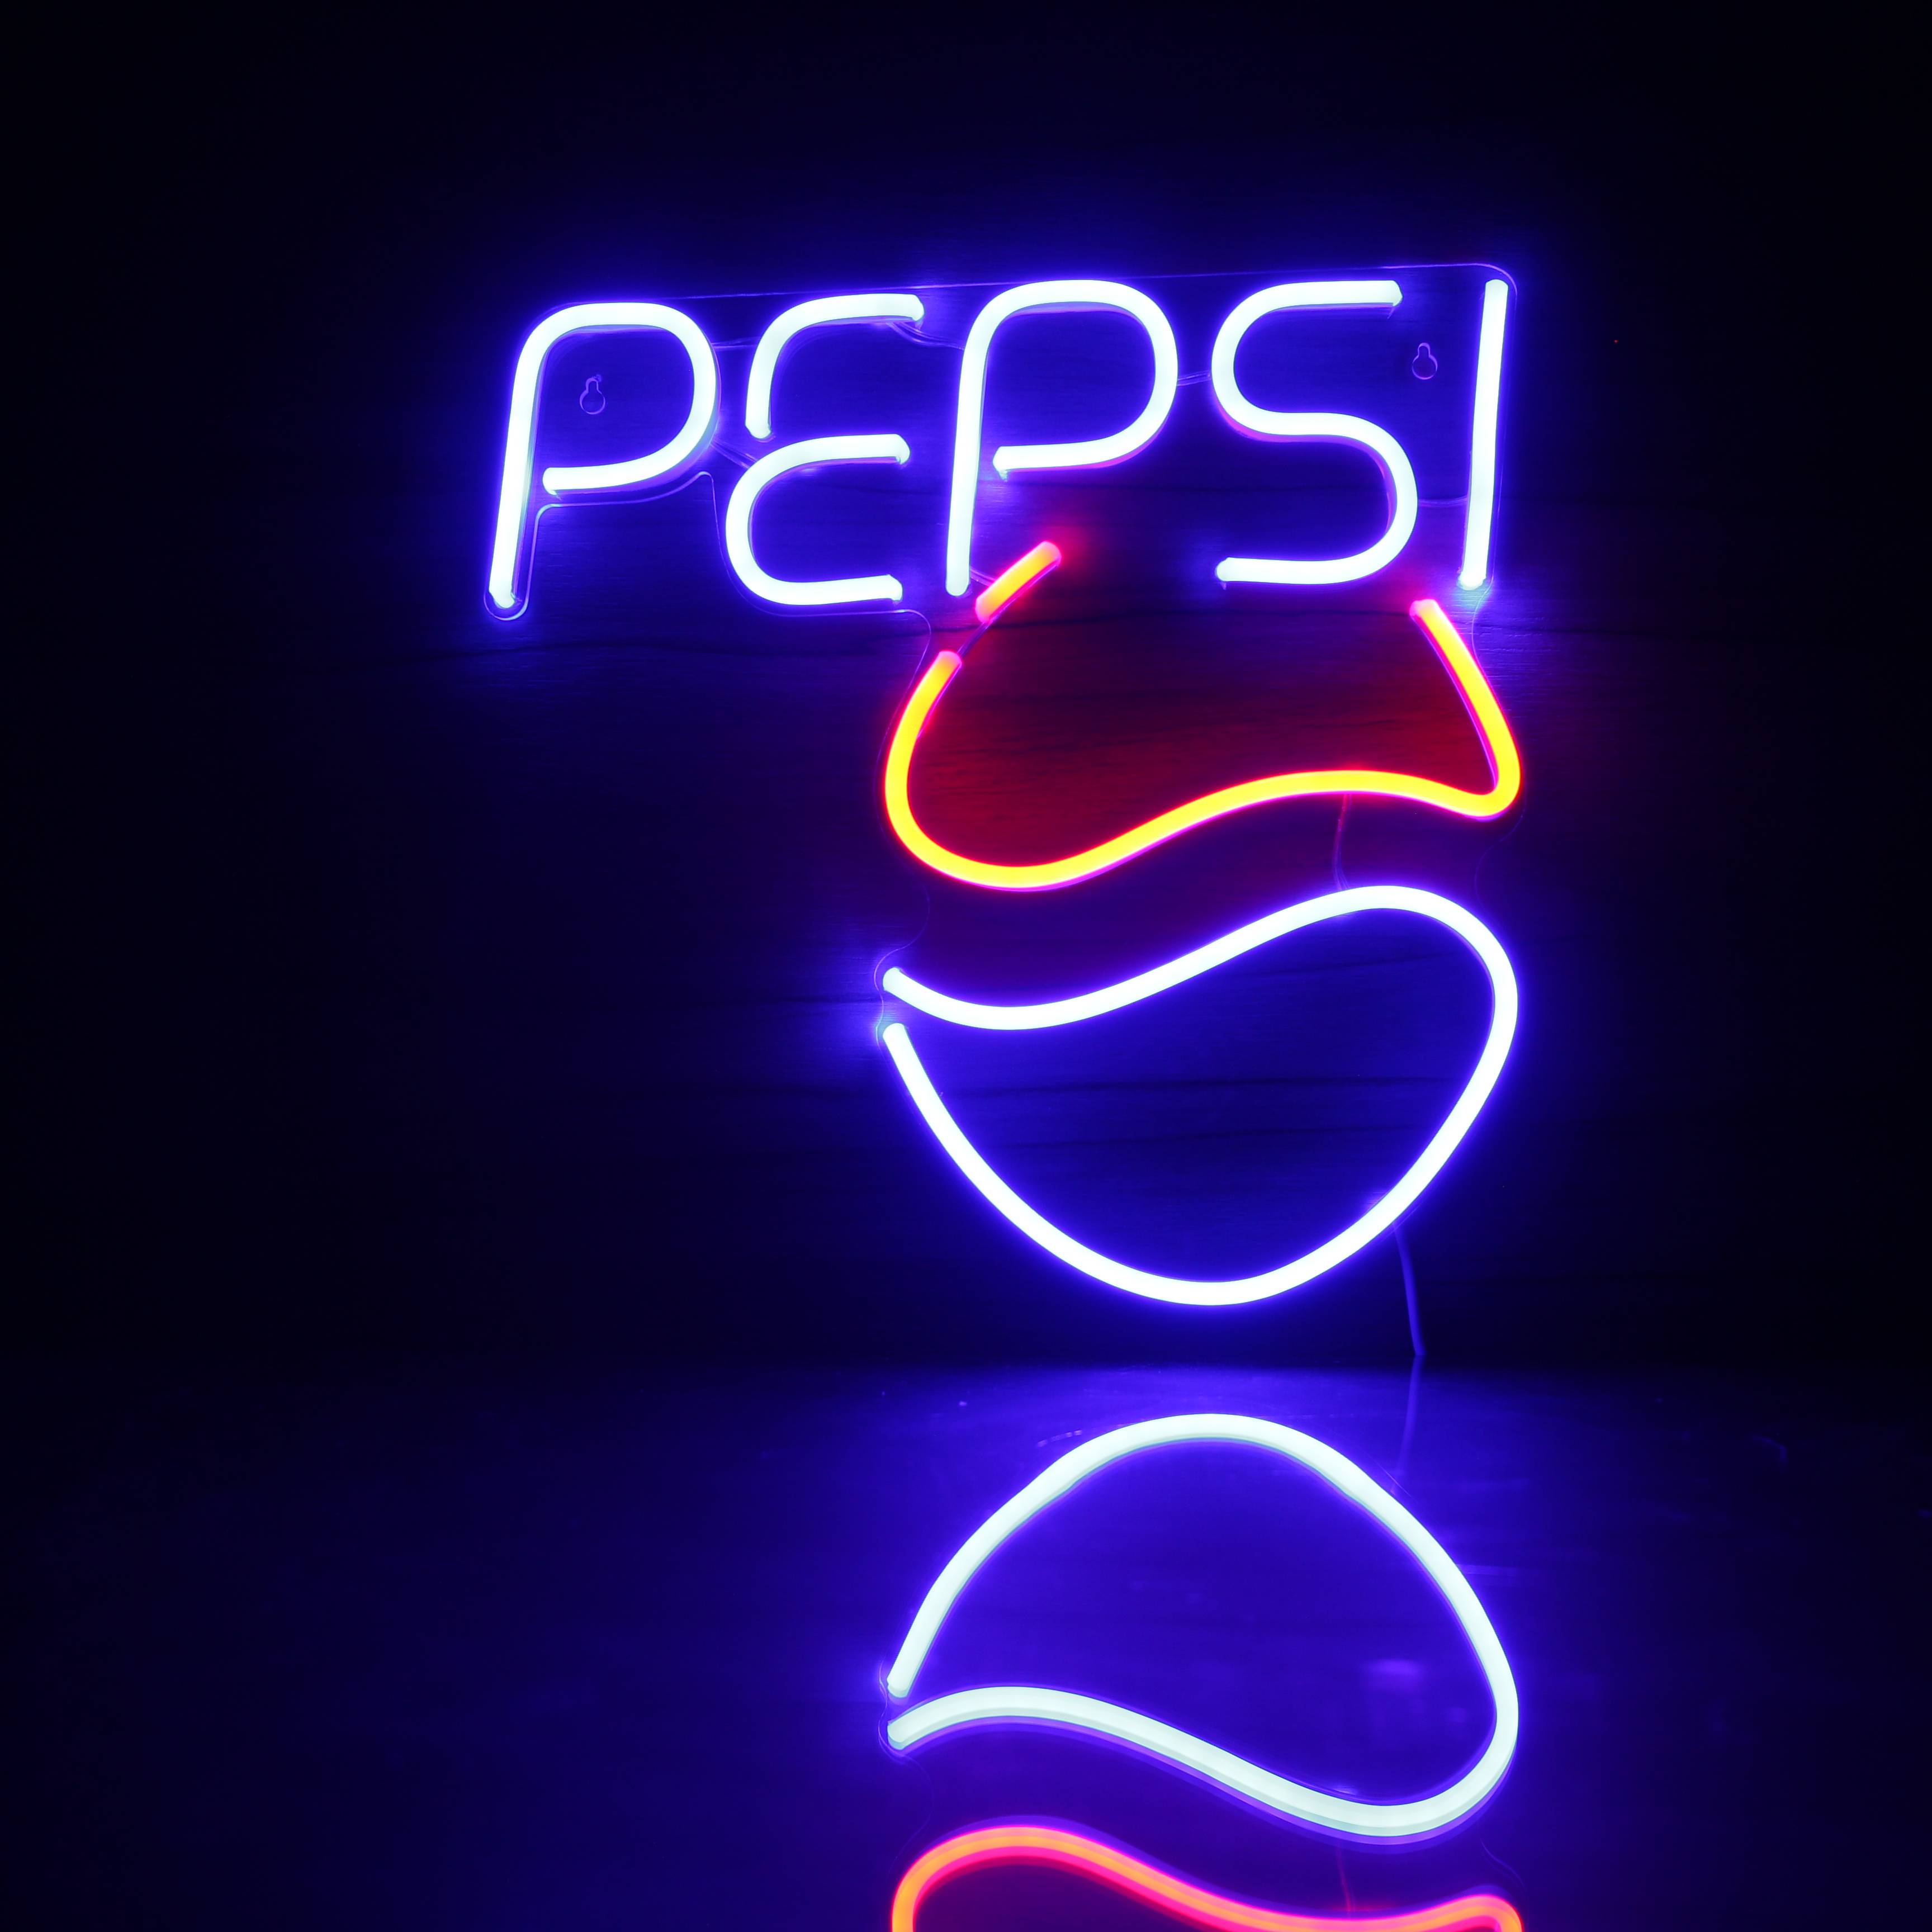 Pepsi 2 Handmade Neon Flex LED Sign